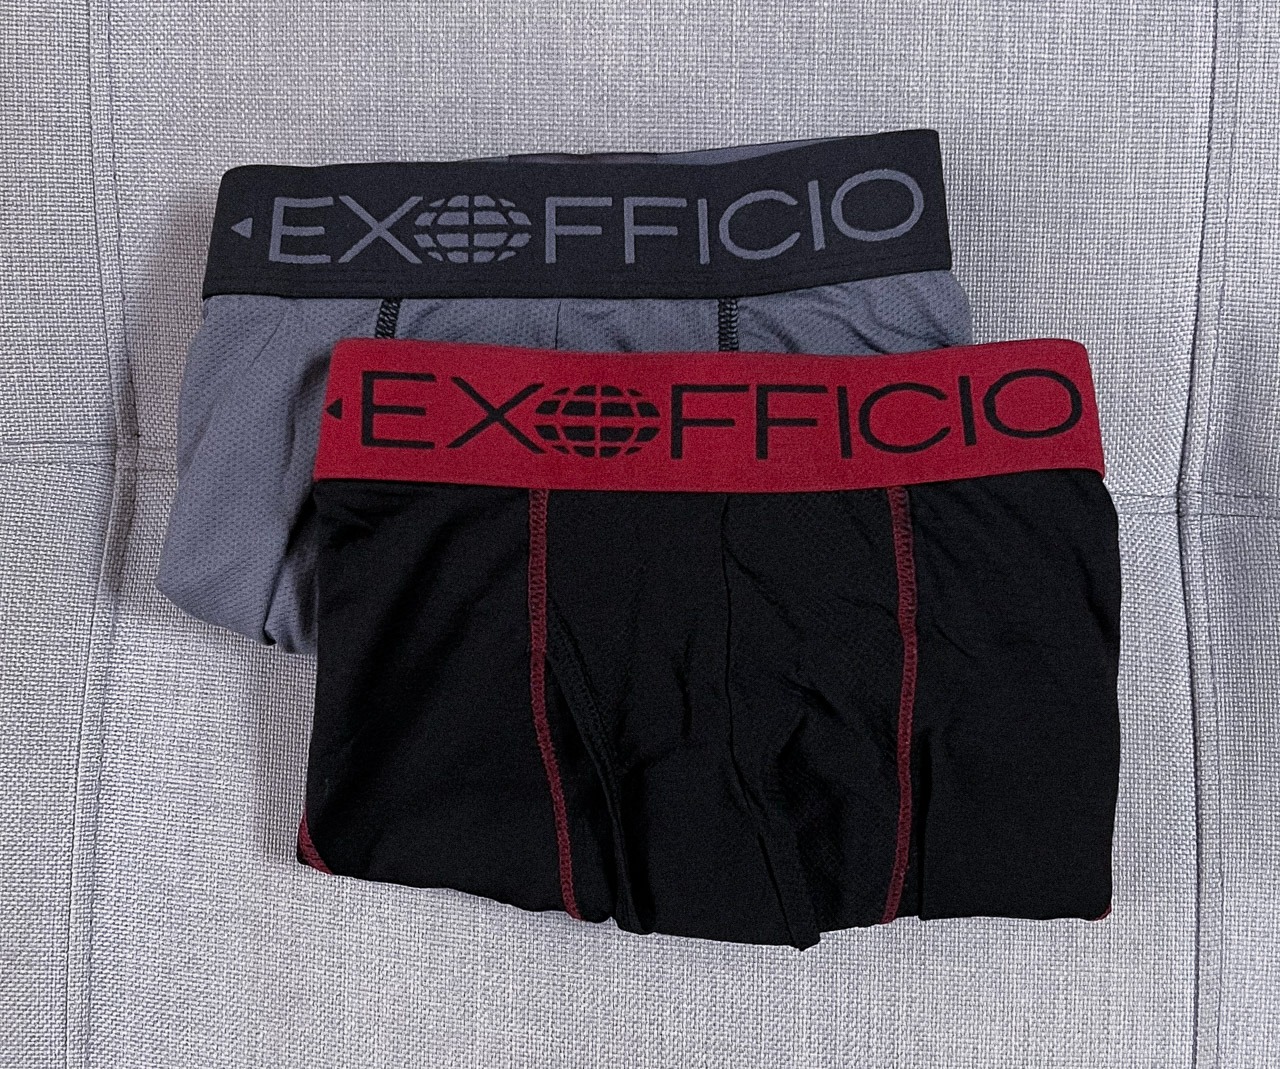 ex officio boxer briefs close up 6 inch